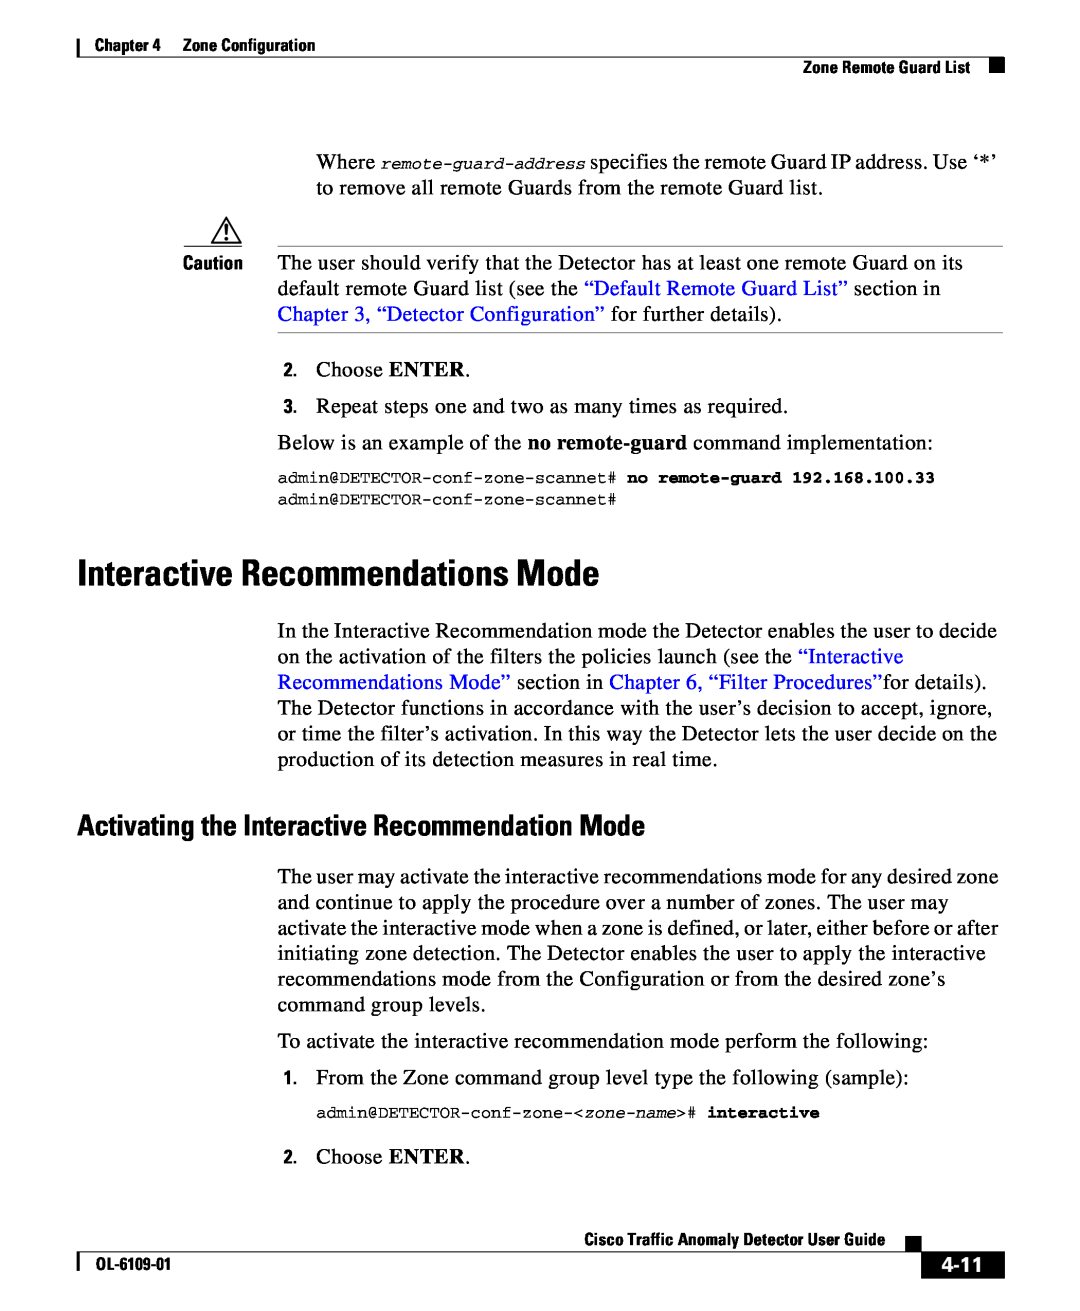 Cisco Systems OL-6109-01 manual Interactive Recommendations Mode, Activating the Interactive Recommendation Mode, 4-11 